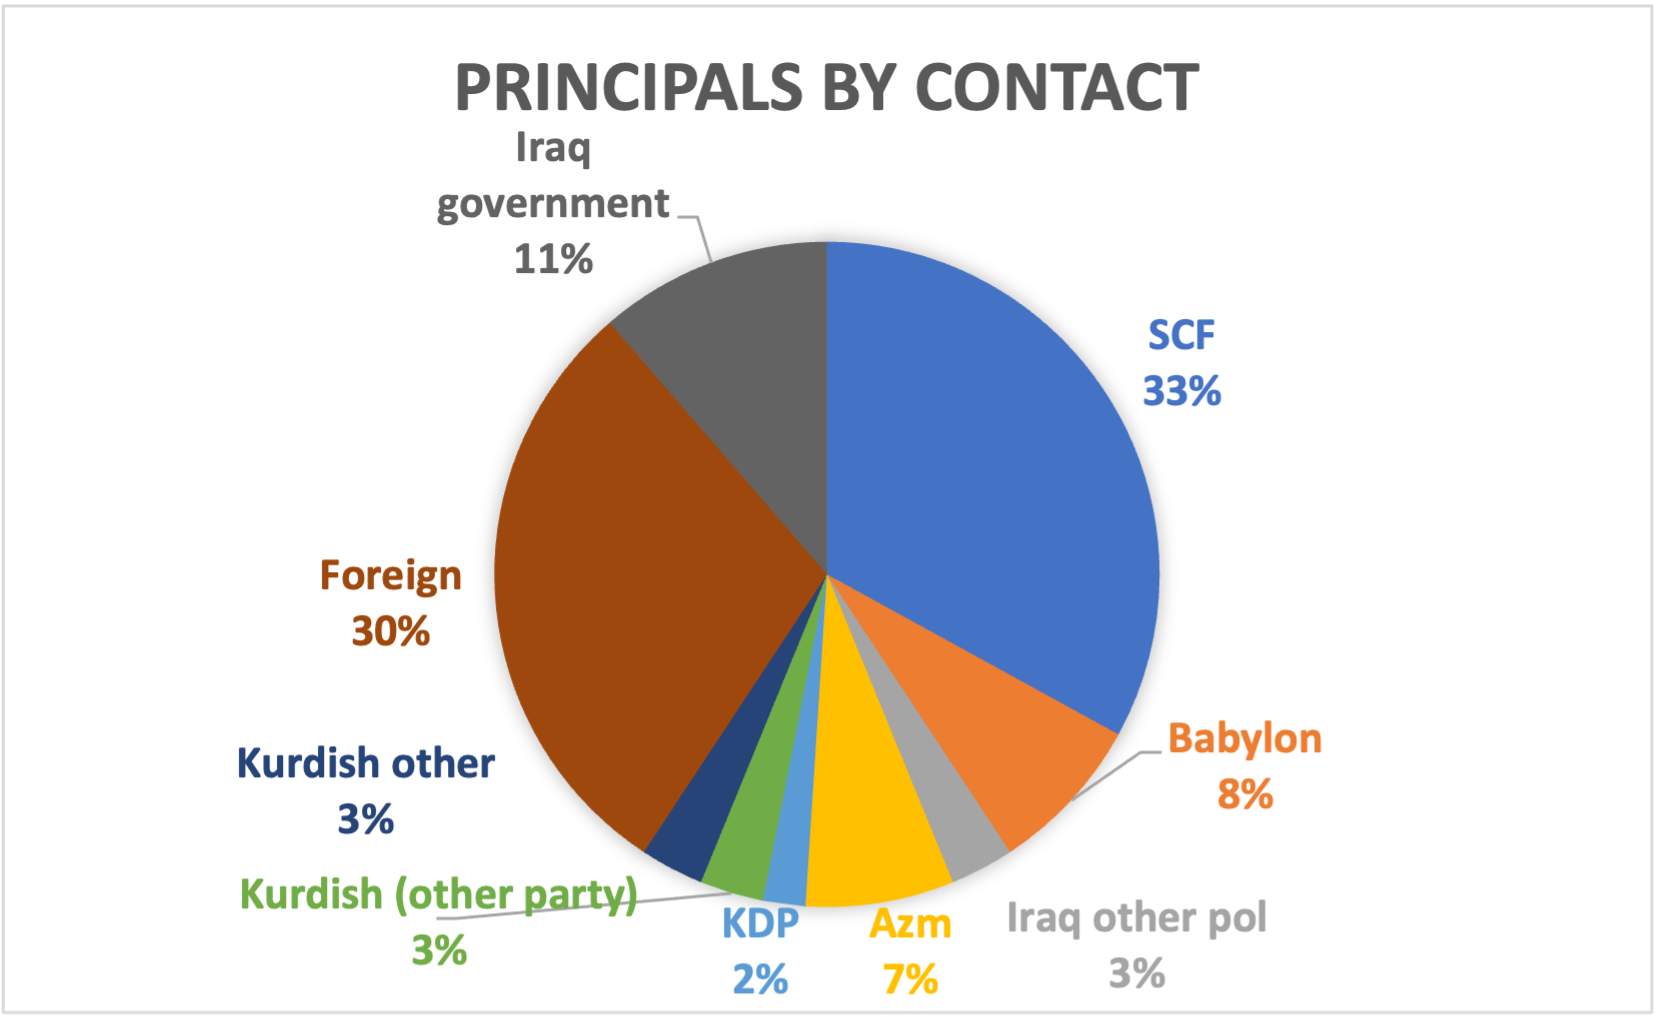 Principals by contact